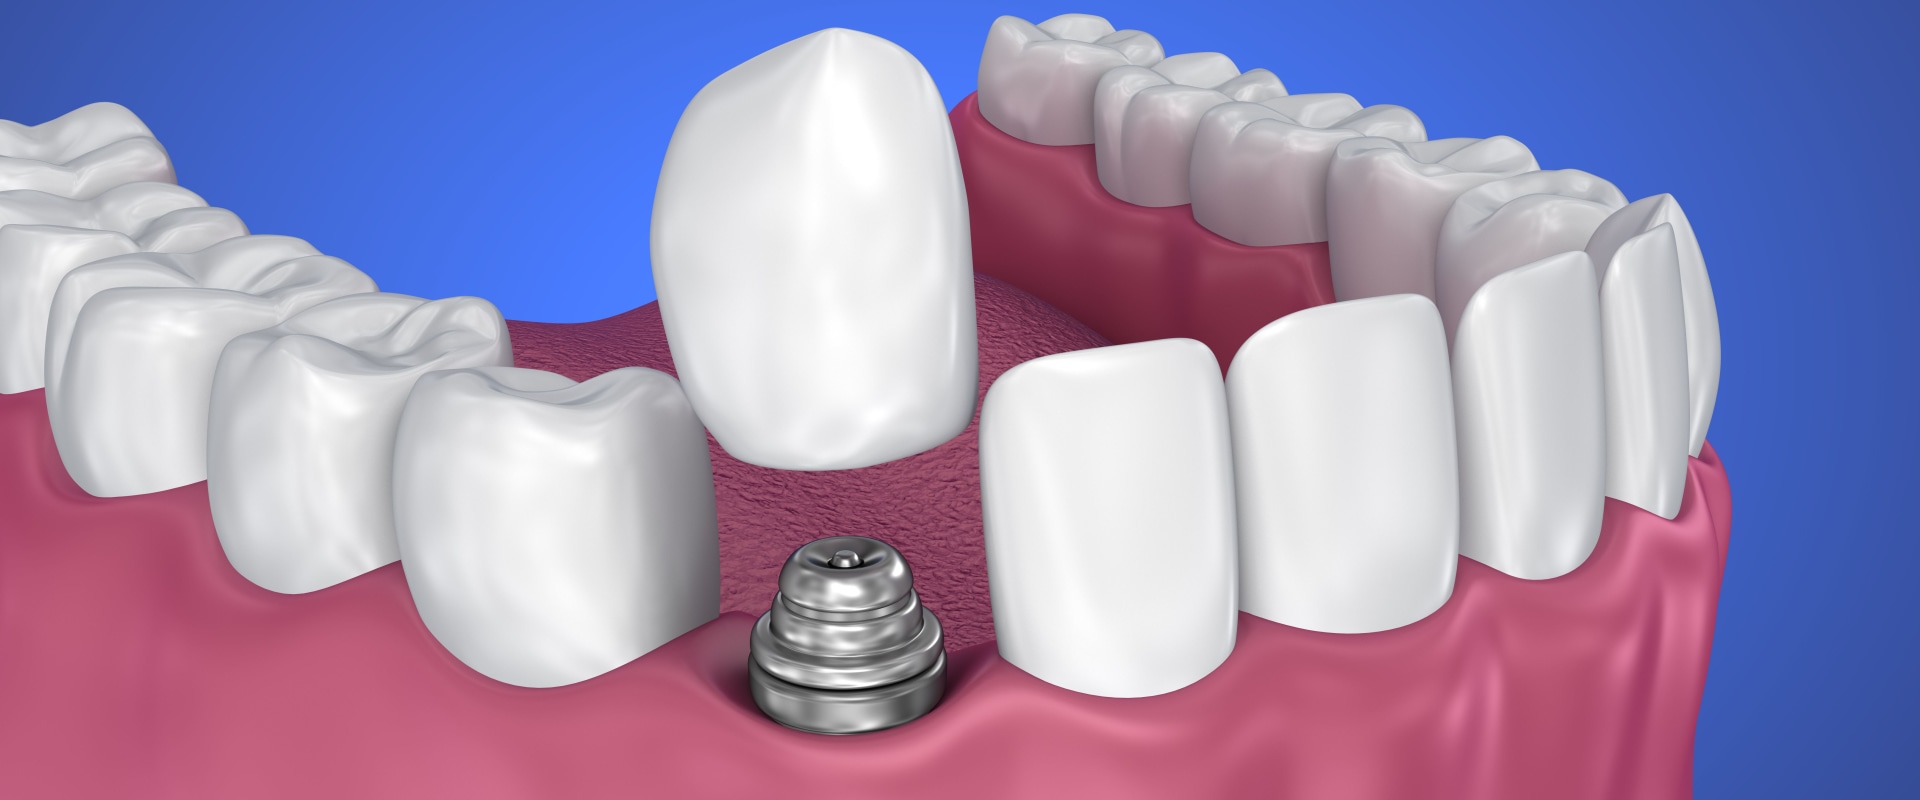 What causes dental implant failure?